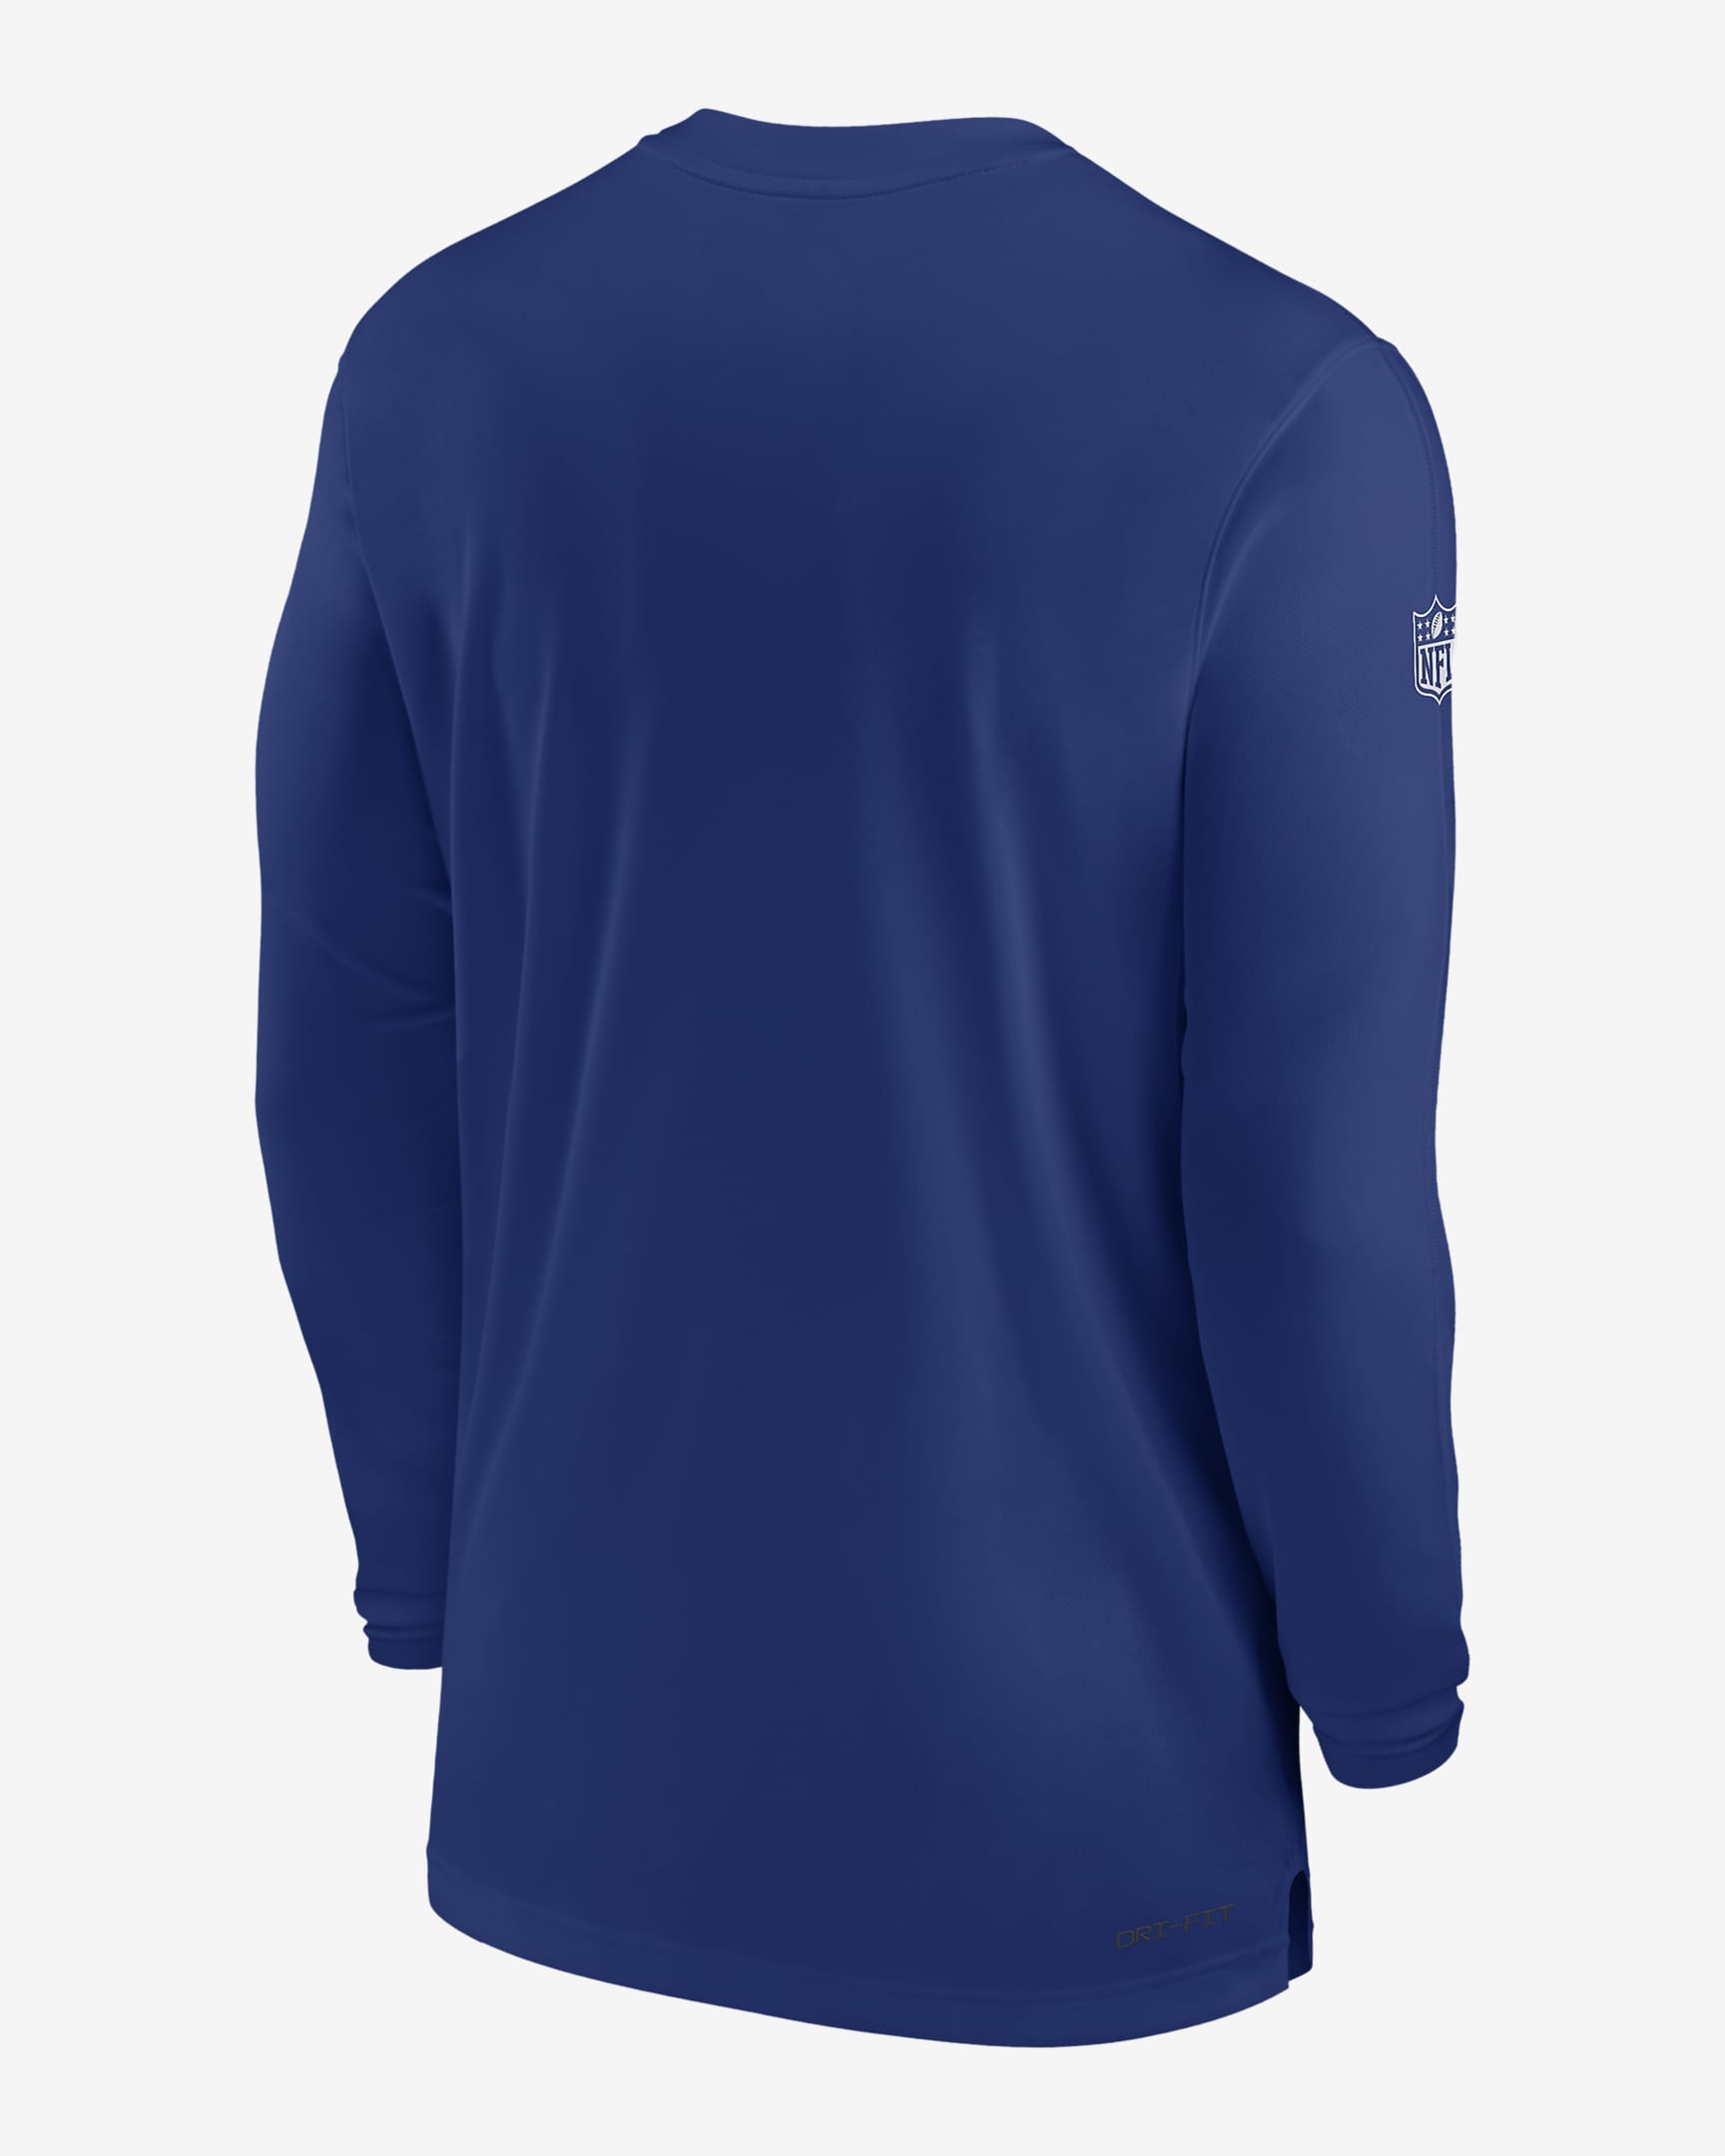 Nike Dri-FIT Sideline Coach (NFL New York Giants) Men's Long-Sleeve Top ...